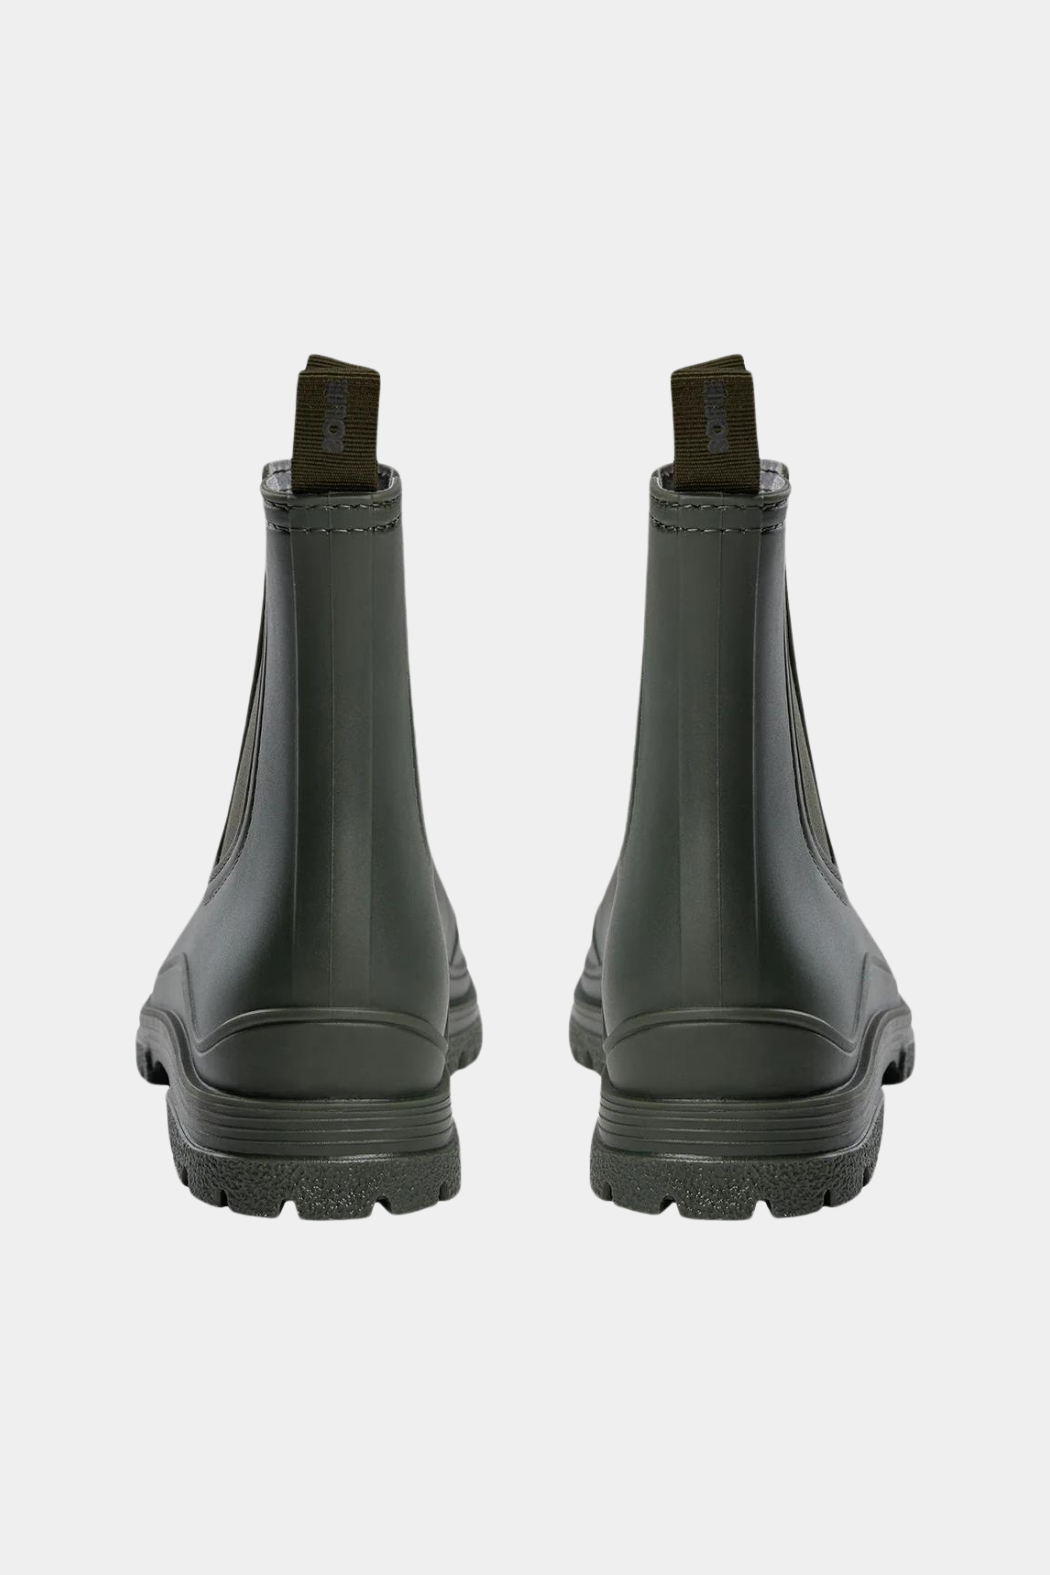 T427 rubber boots, dark green